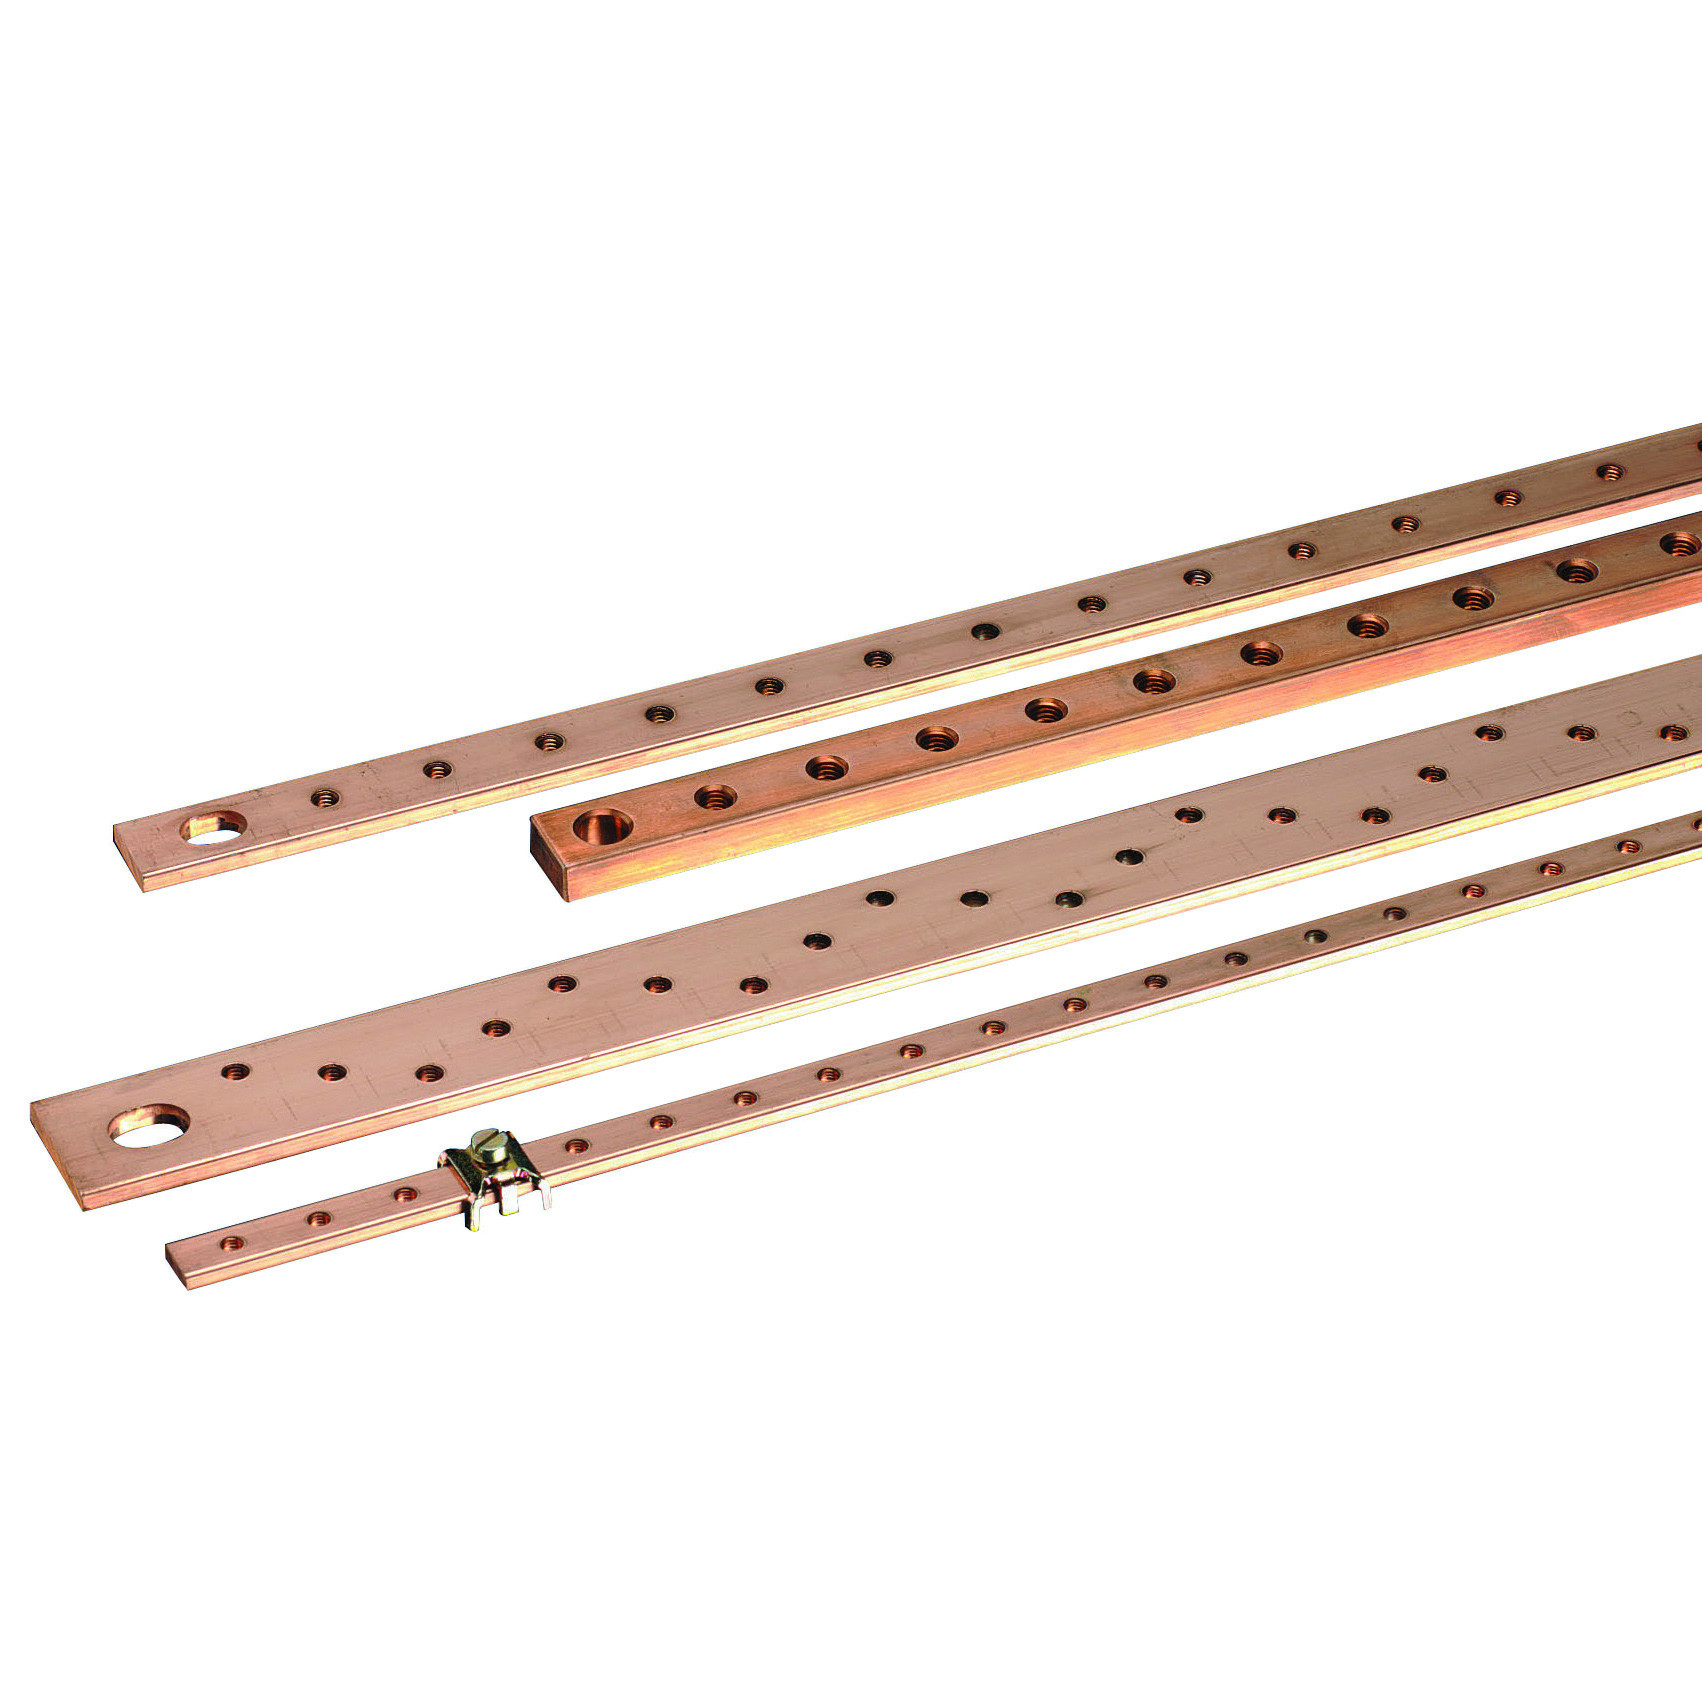 nVent Eriflex, 549200, TCB18X4-1M, TCB Threaded Solid Copper Busbar, 1m  Length, 18 x 4, M8 Threaded, 20mm Pitch